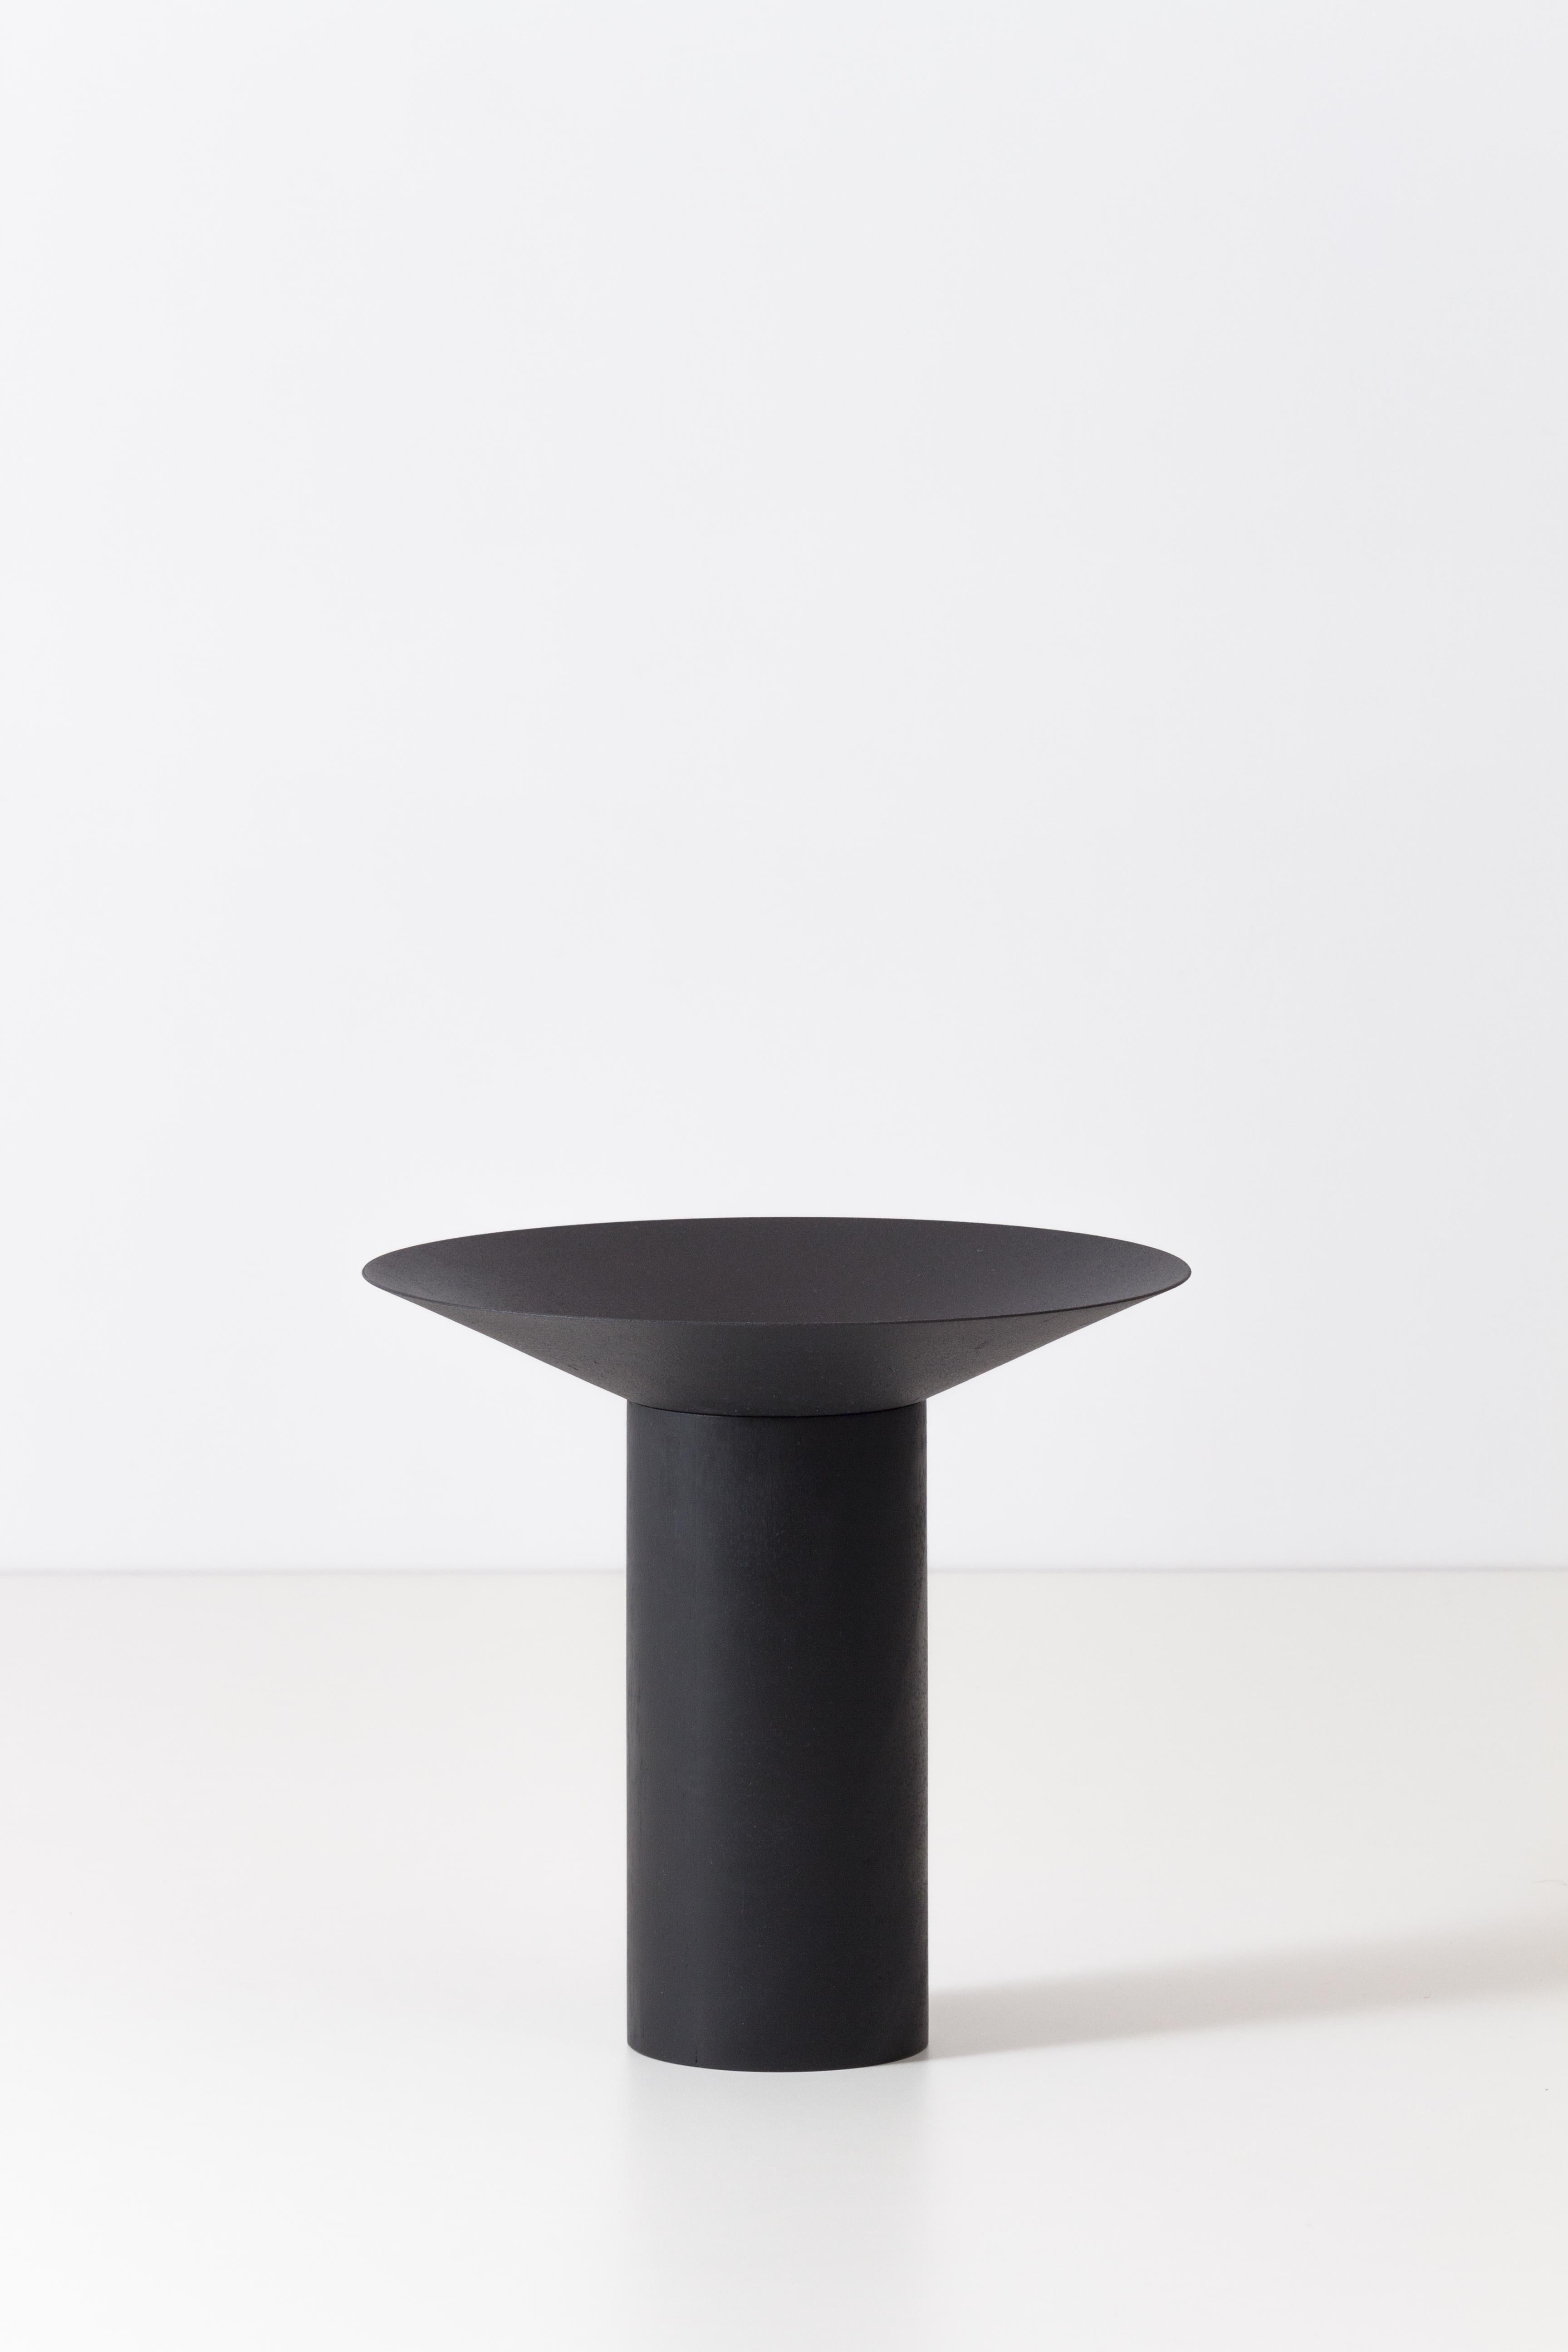 Dossel Collection (Set of 5) by Estúdio Dentro, Brazilian Contemporary Design For Sale 7